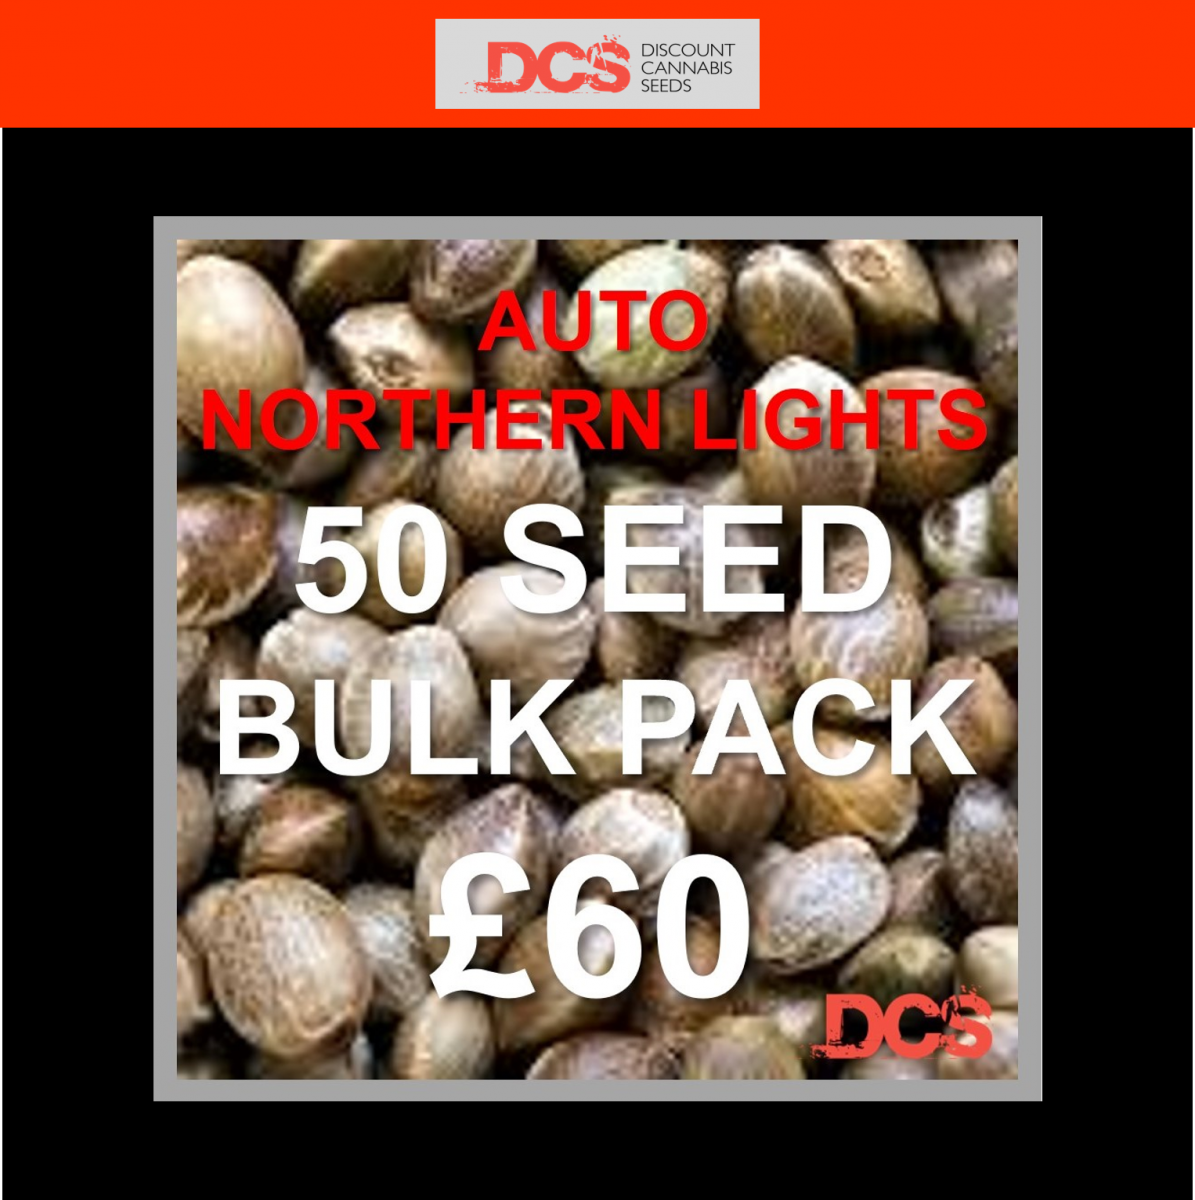 Bulk Cannabis Seeds Get 50 Seeds for £60 at Discount Cannabis Seeds.